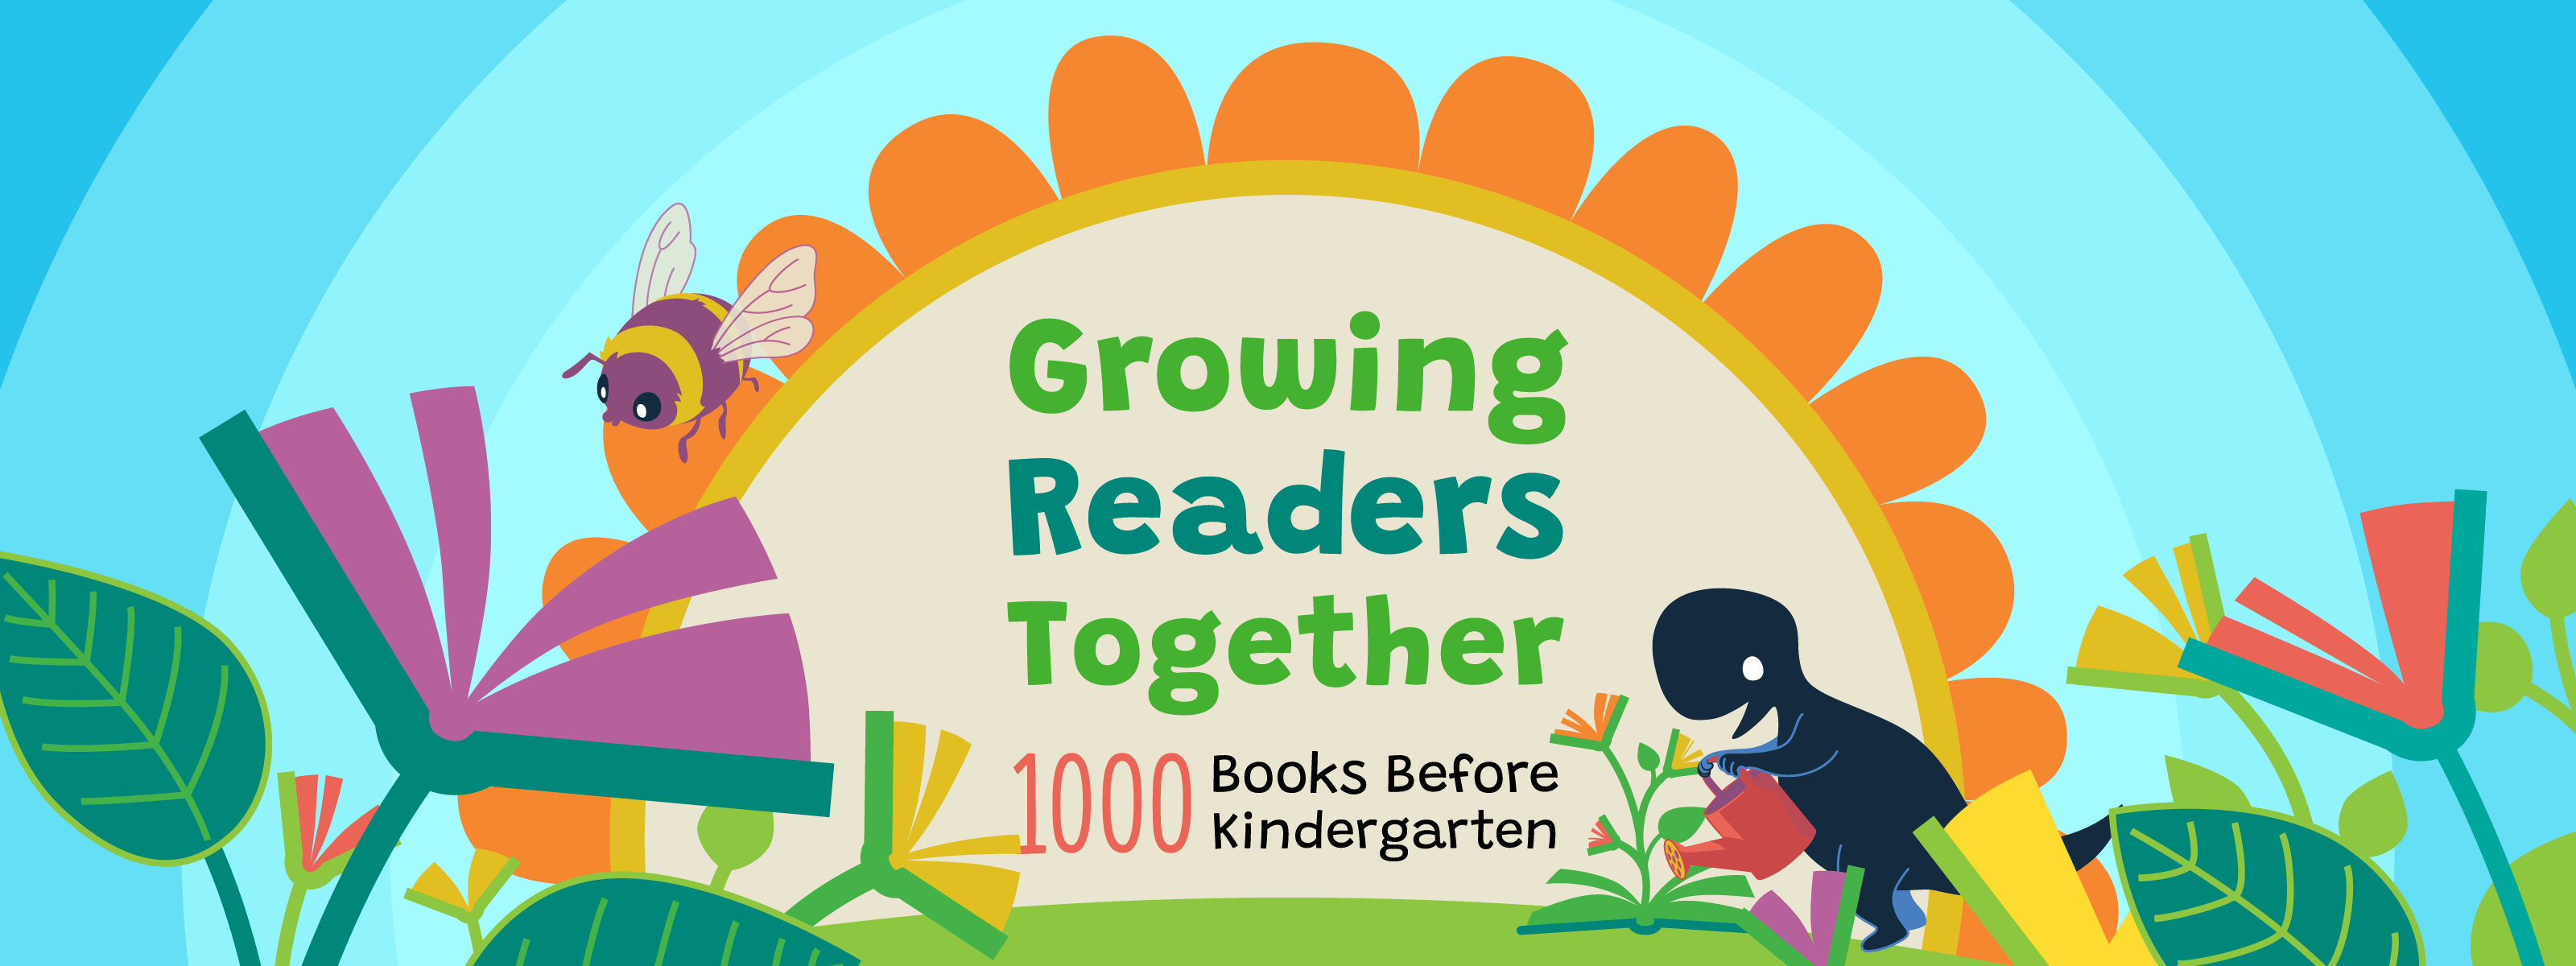 Growing Readers Together: 1000 Books Before Kindergarten